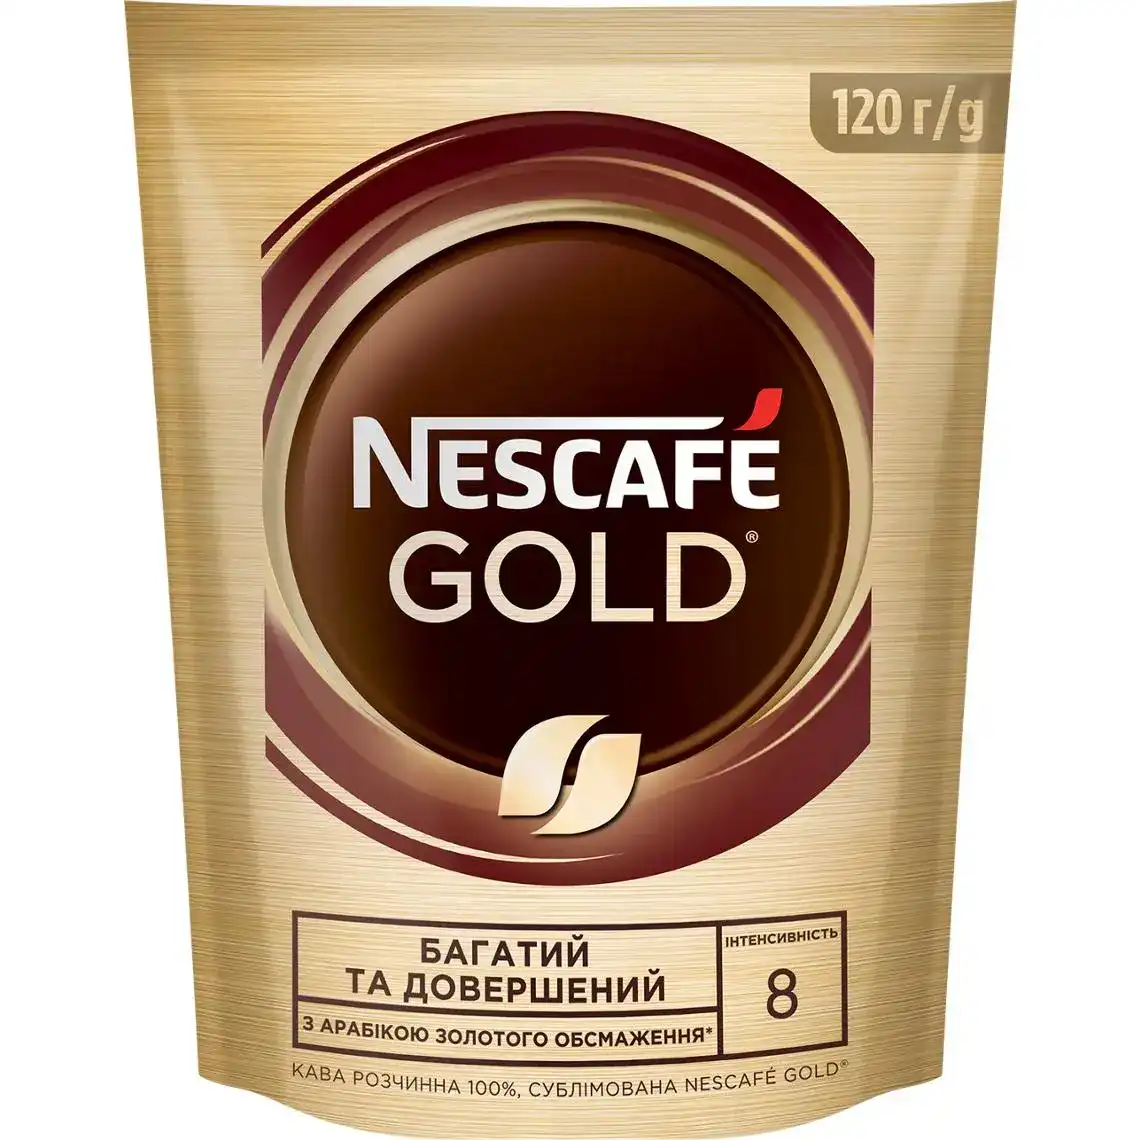 Кава розчинна сублімована Nescafe Gold 120 г